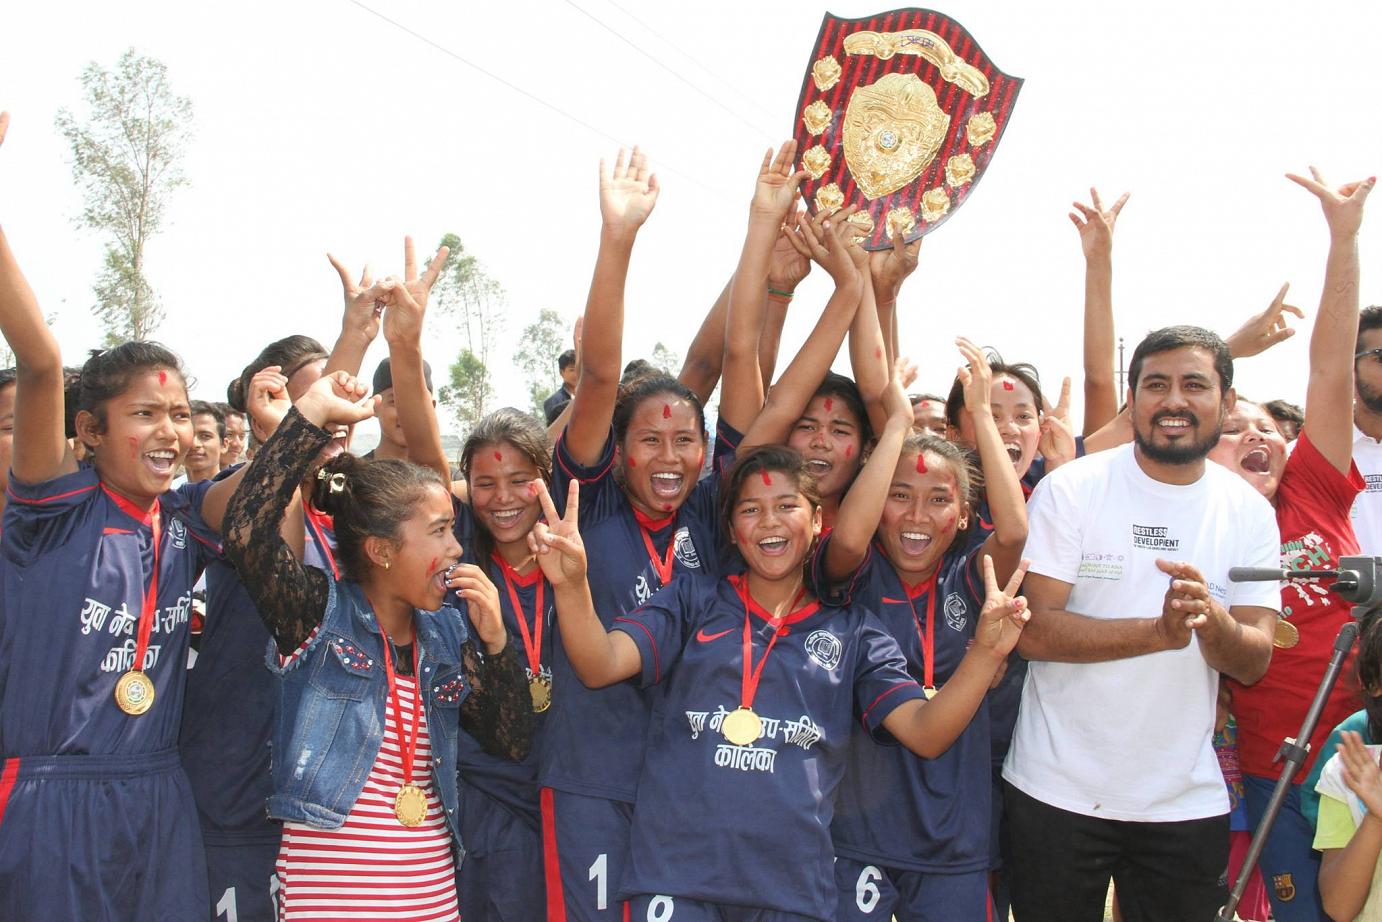 Girl's sport club in Nepal